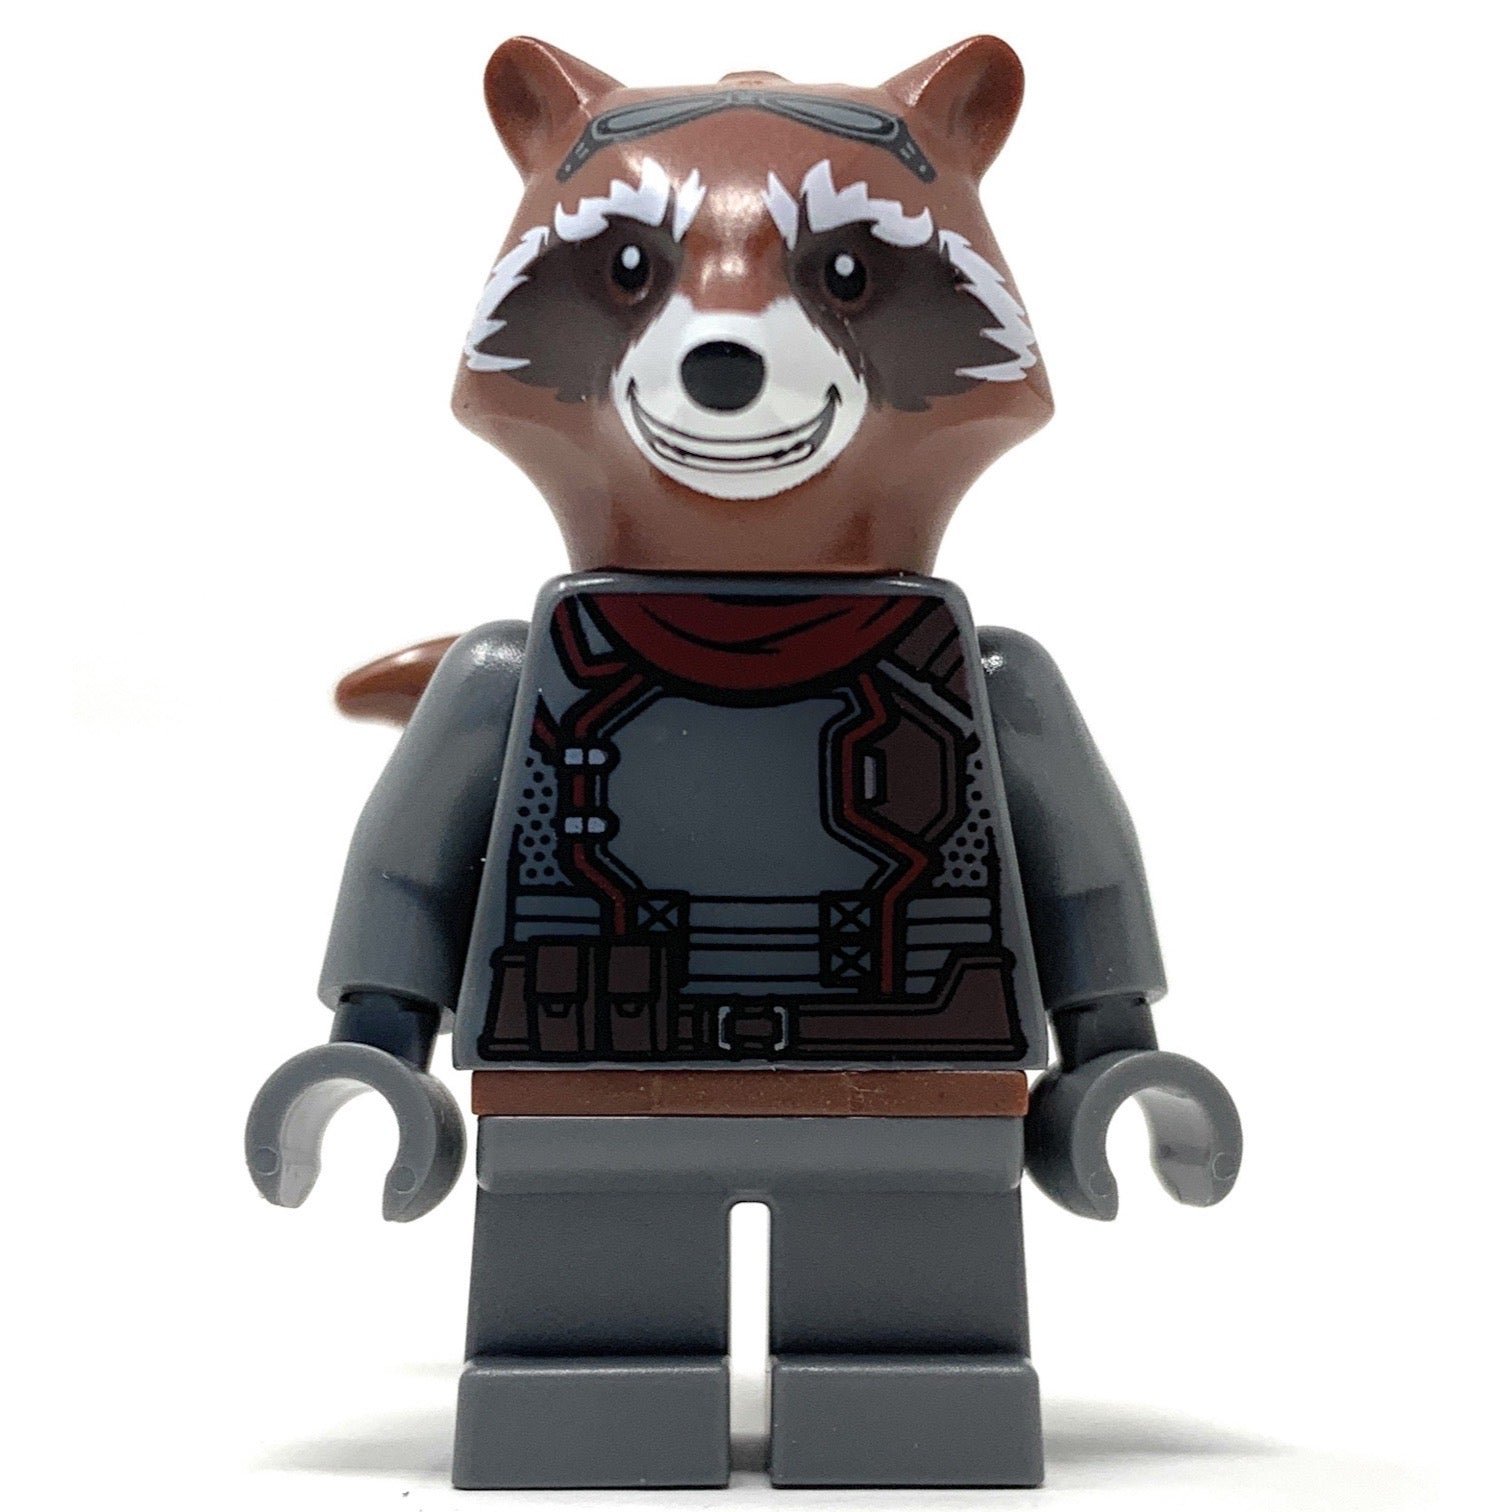 Rocket Raccoon (Gray Outfit, Infinity Saga) - LEGO Marvel Minifigure (2021)